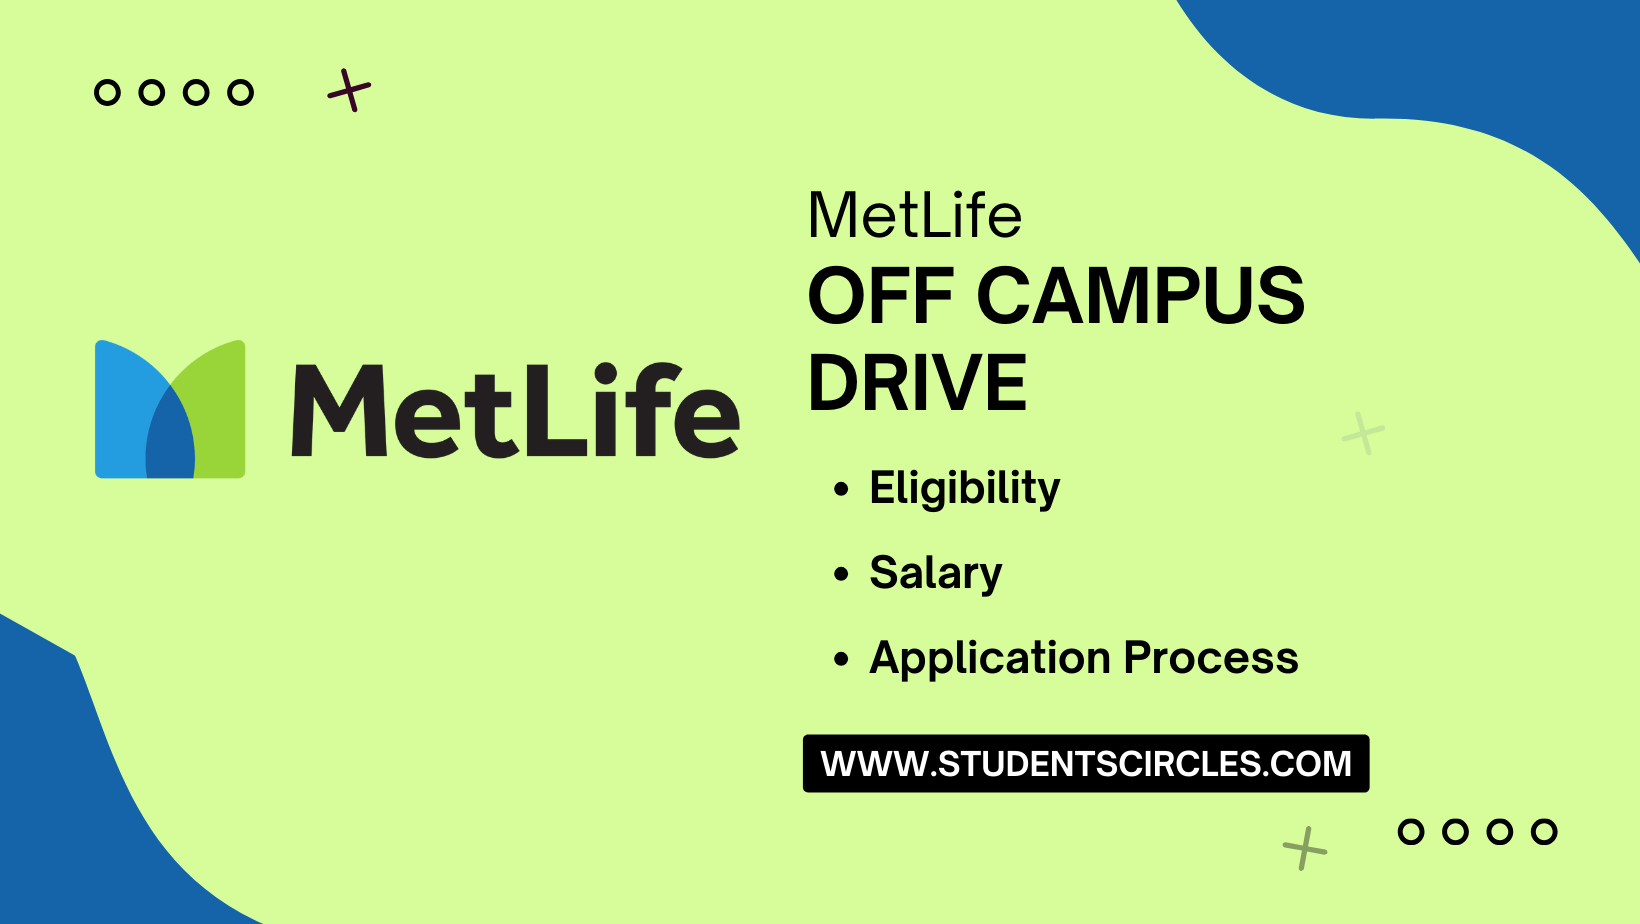 MetLife Off Campus Drive